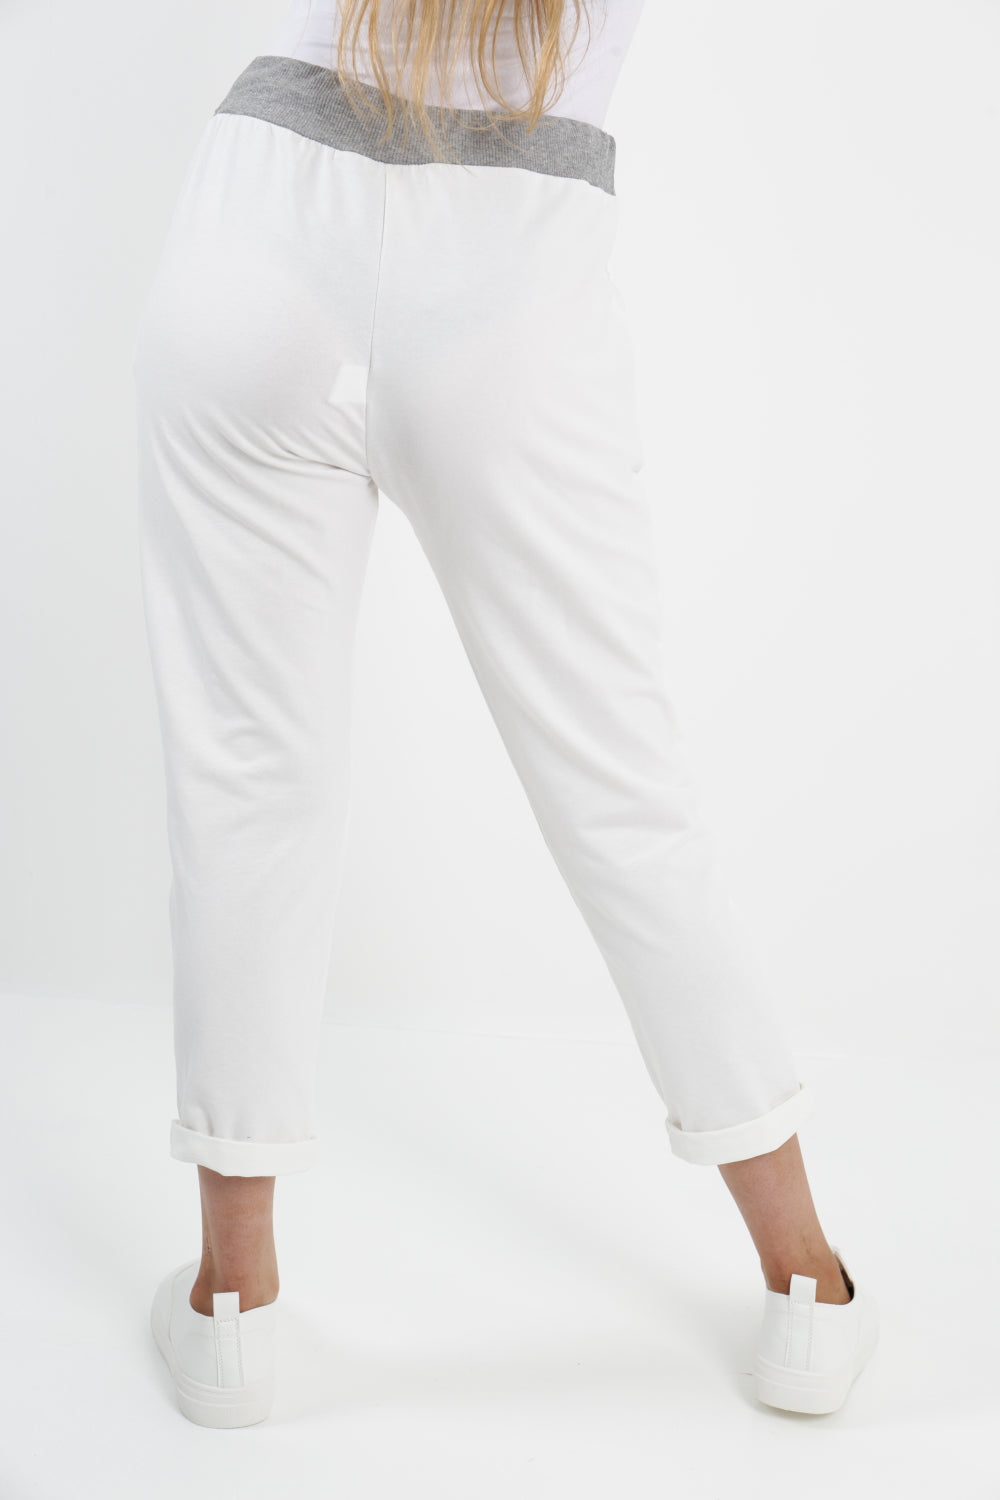 Italian Plain Loose Pockets Cotton Ladies Trouser